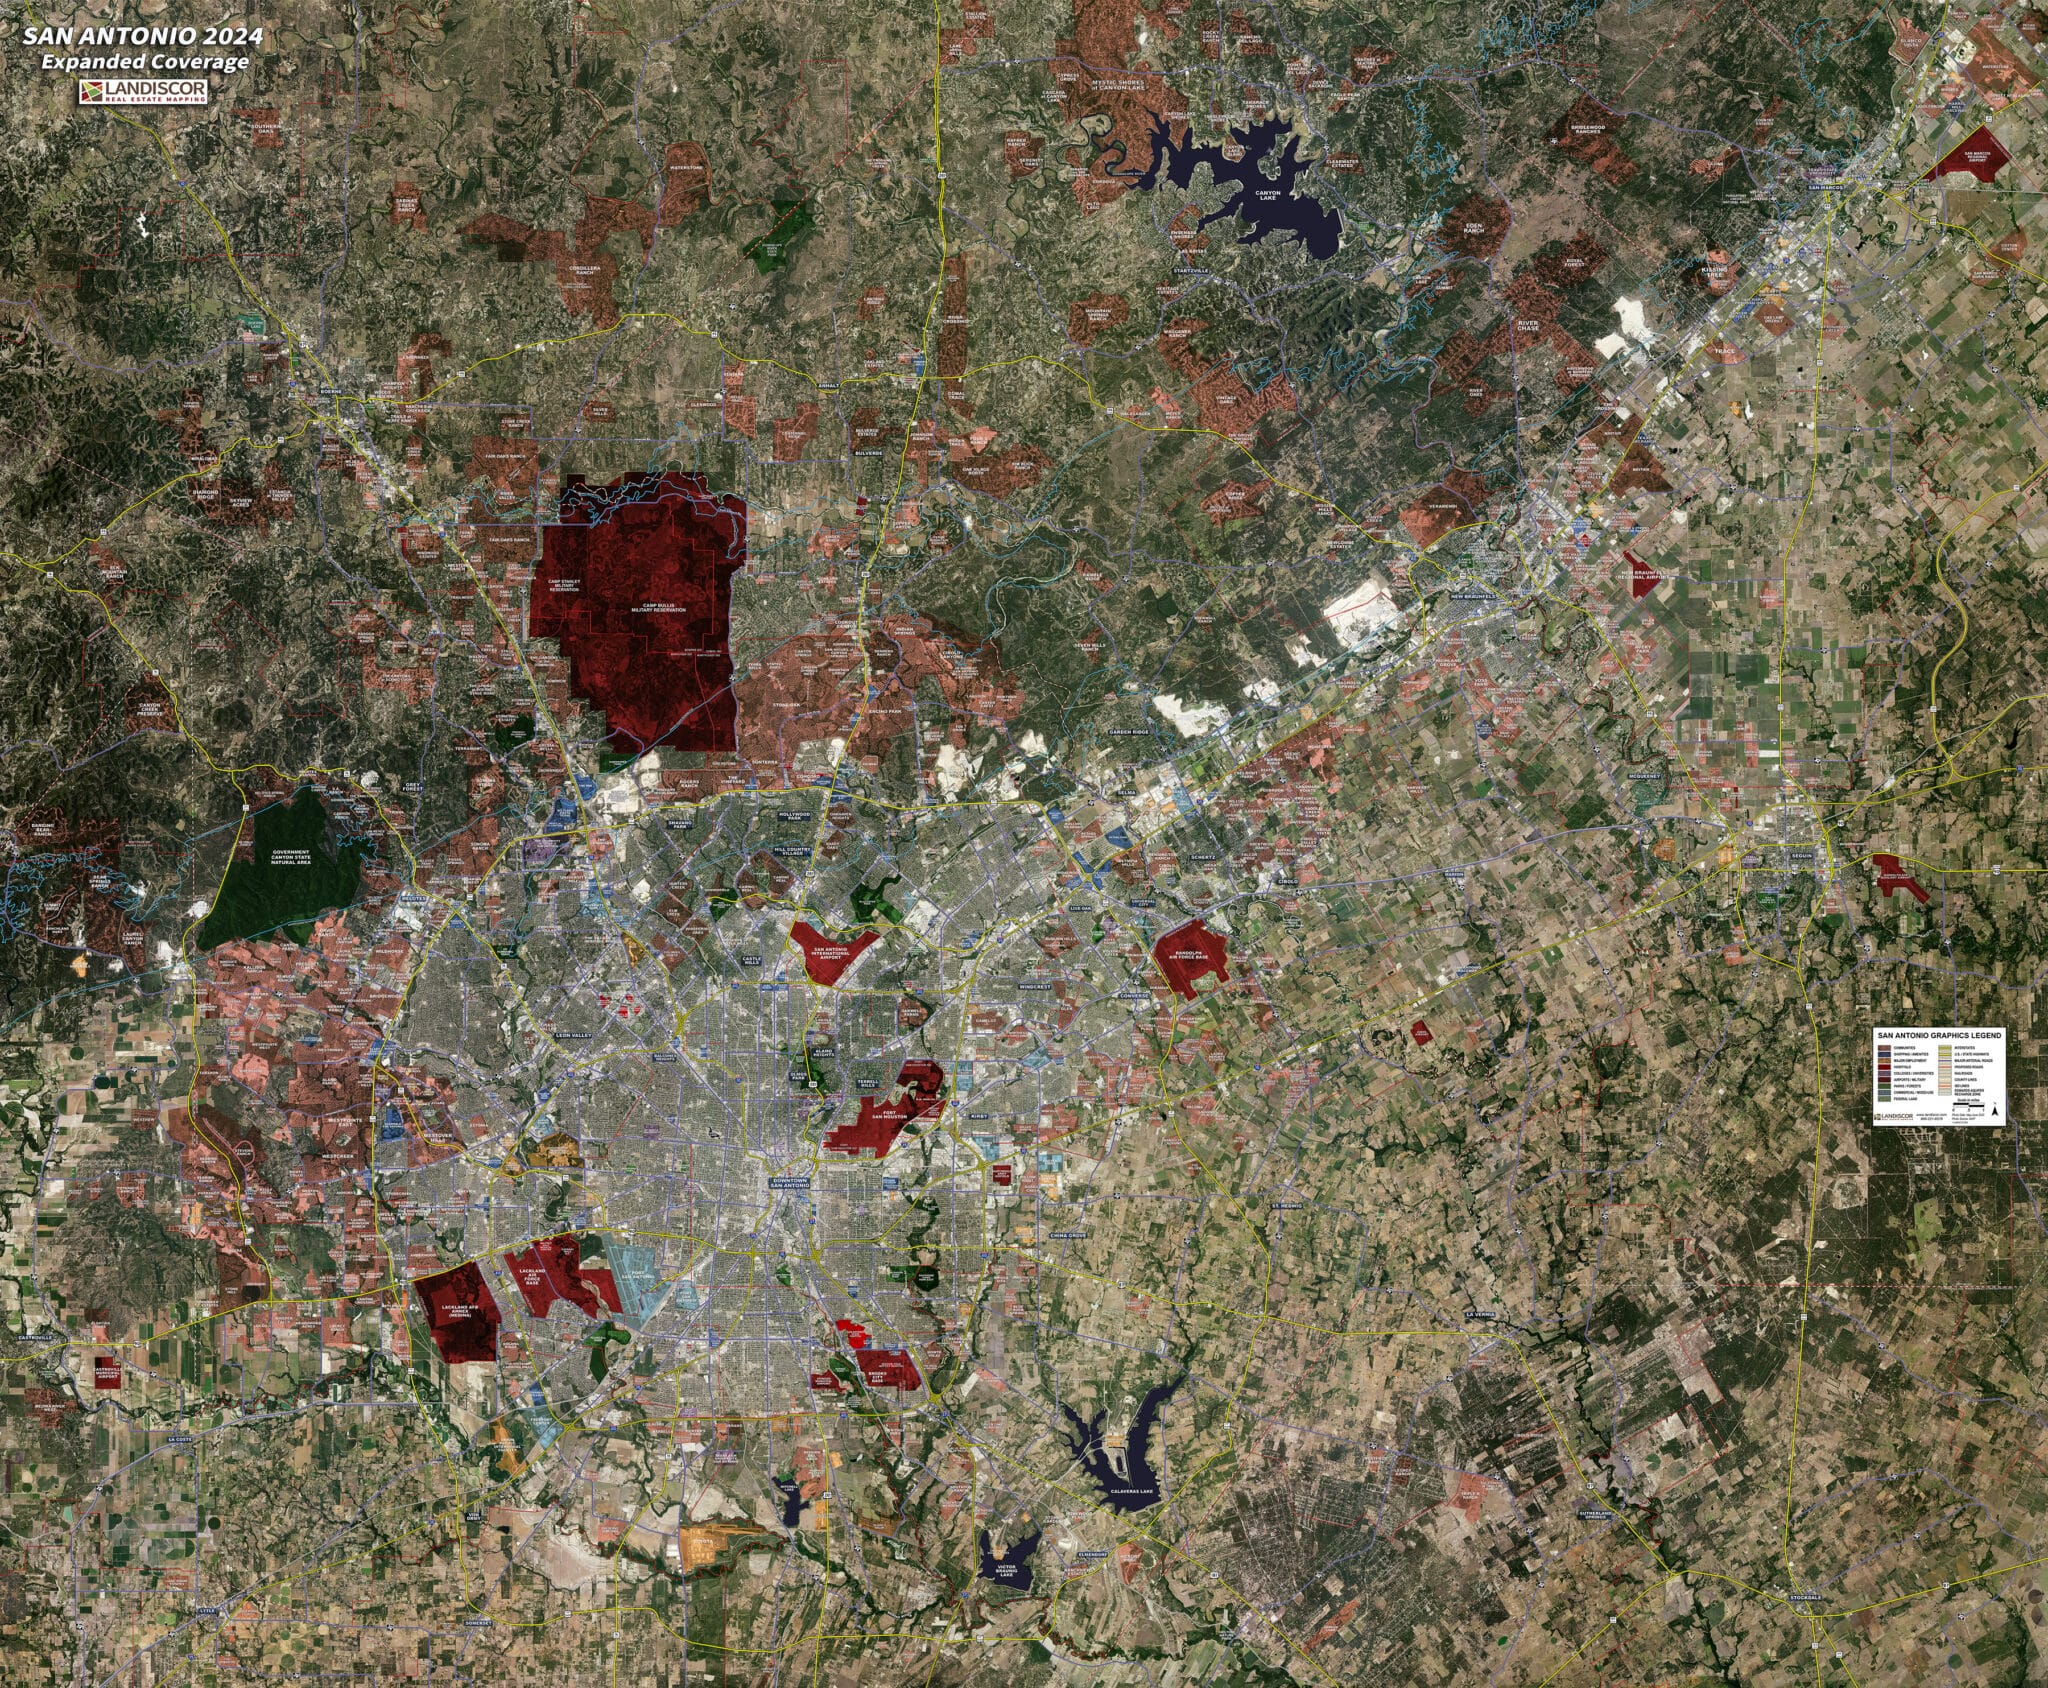 Aerial Wall Map Mural - San Antonio Expanded